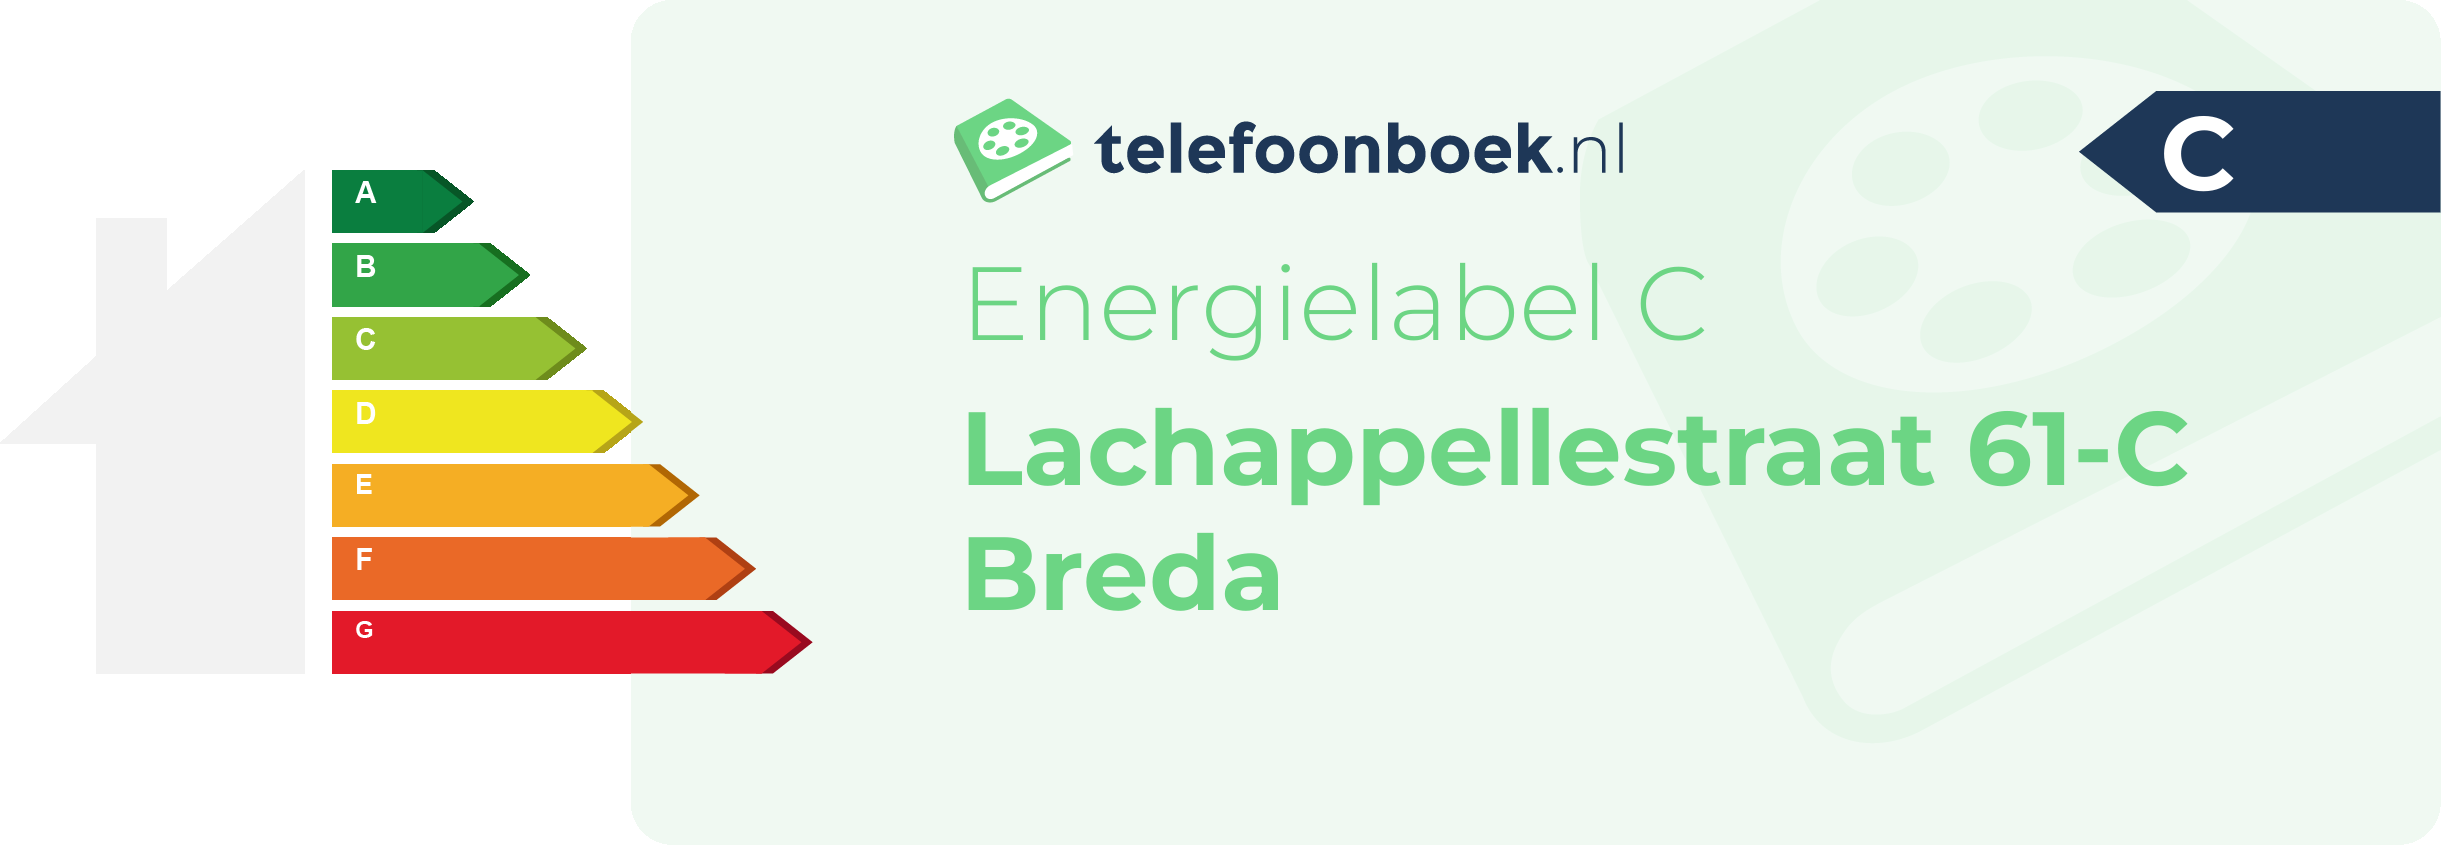 Energielabel Lachappellestraat 61-C Breda